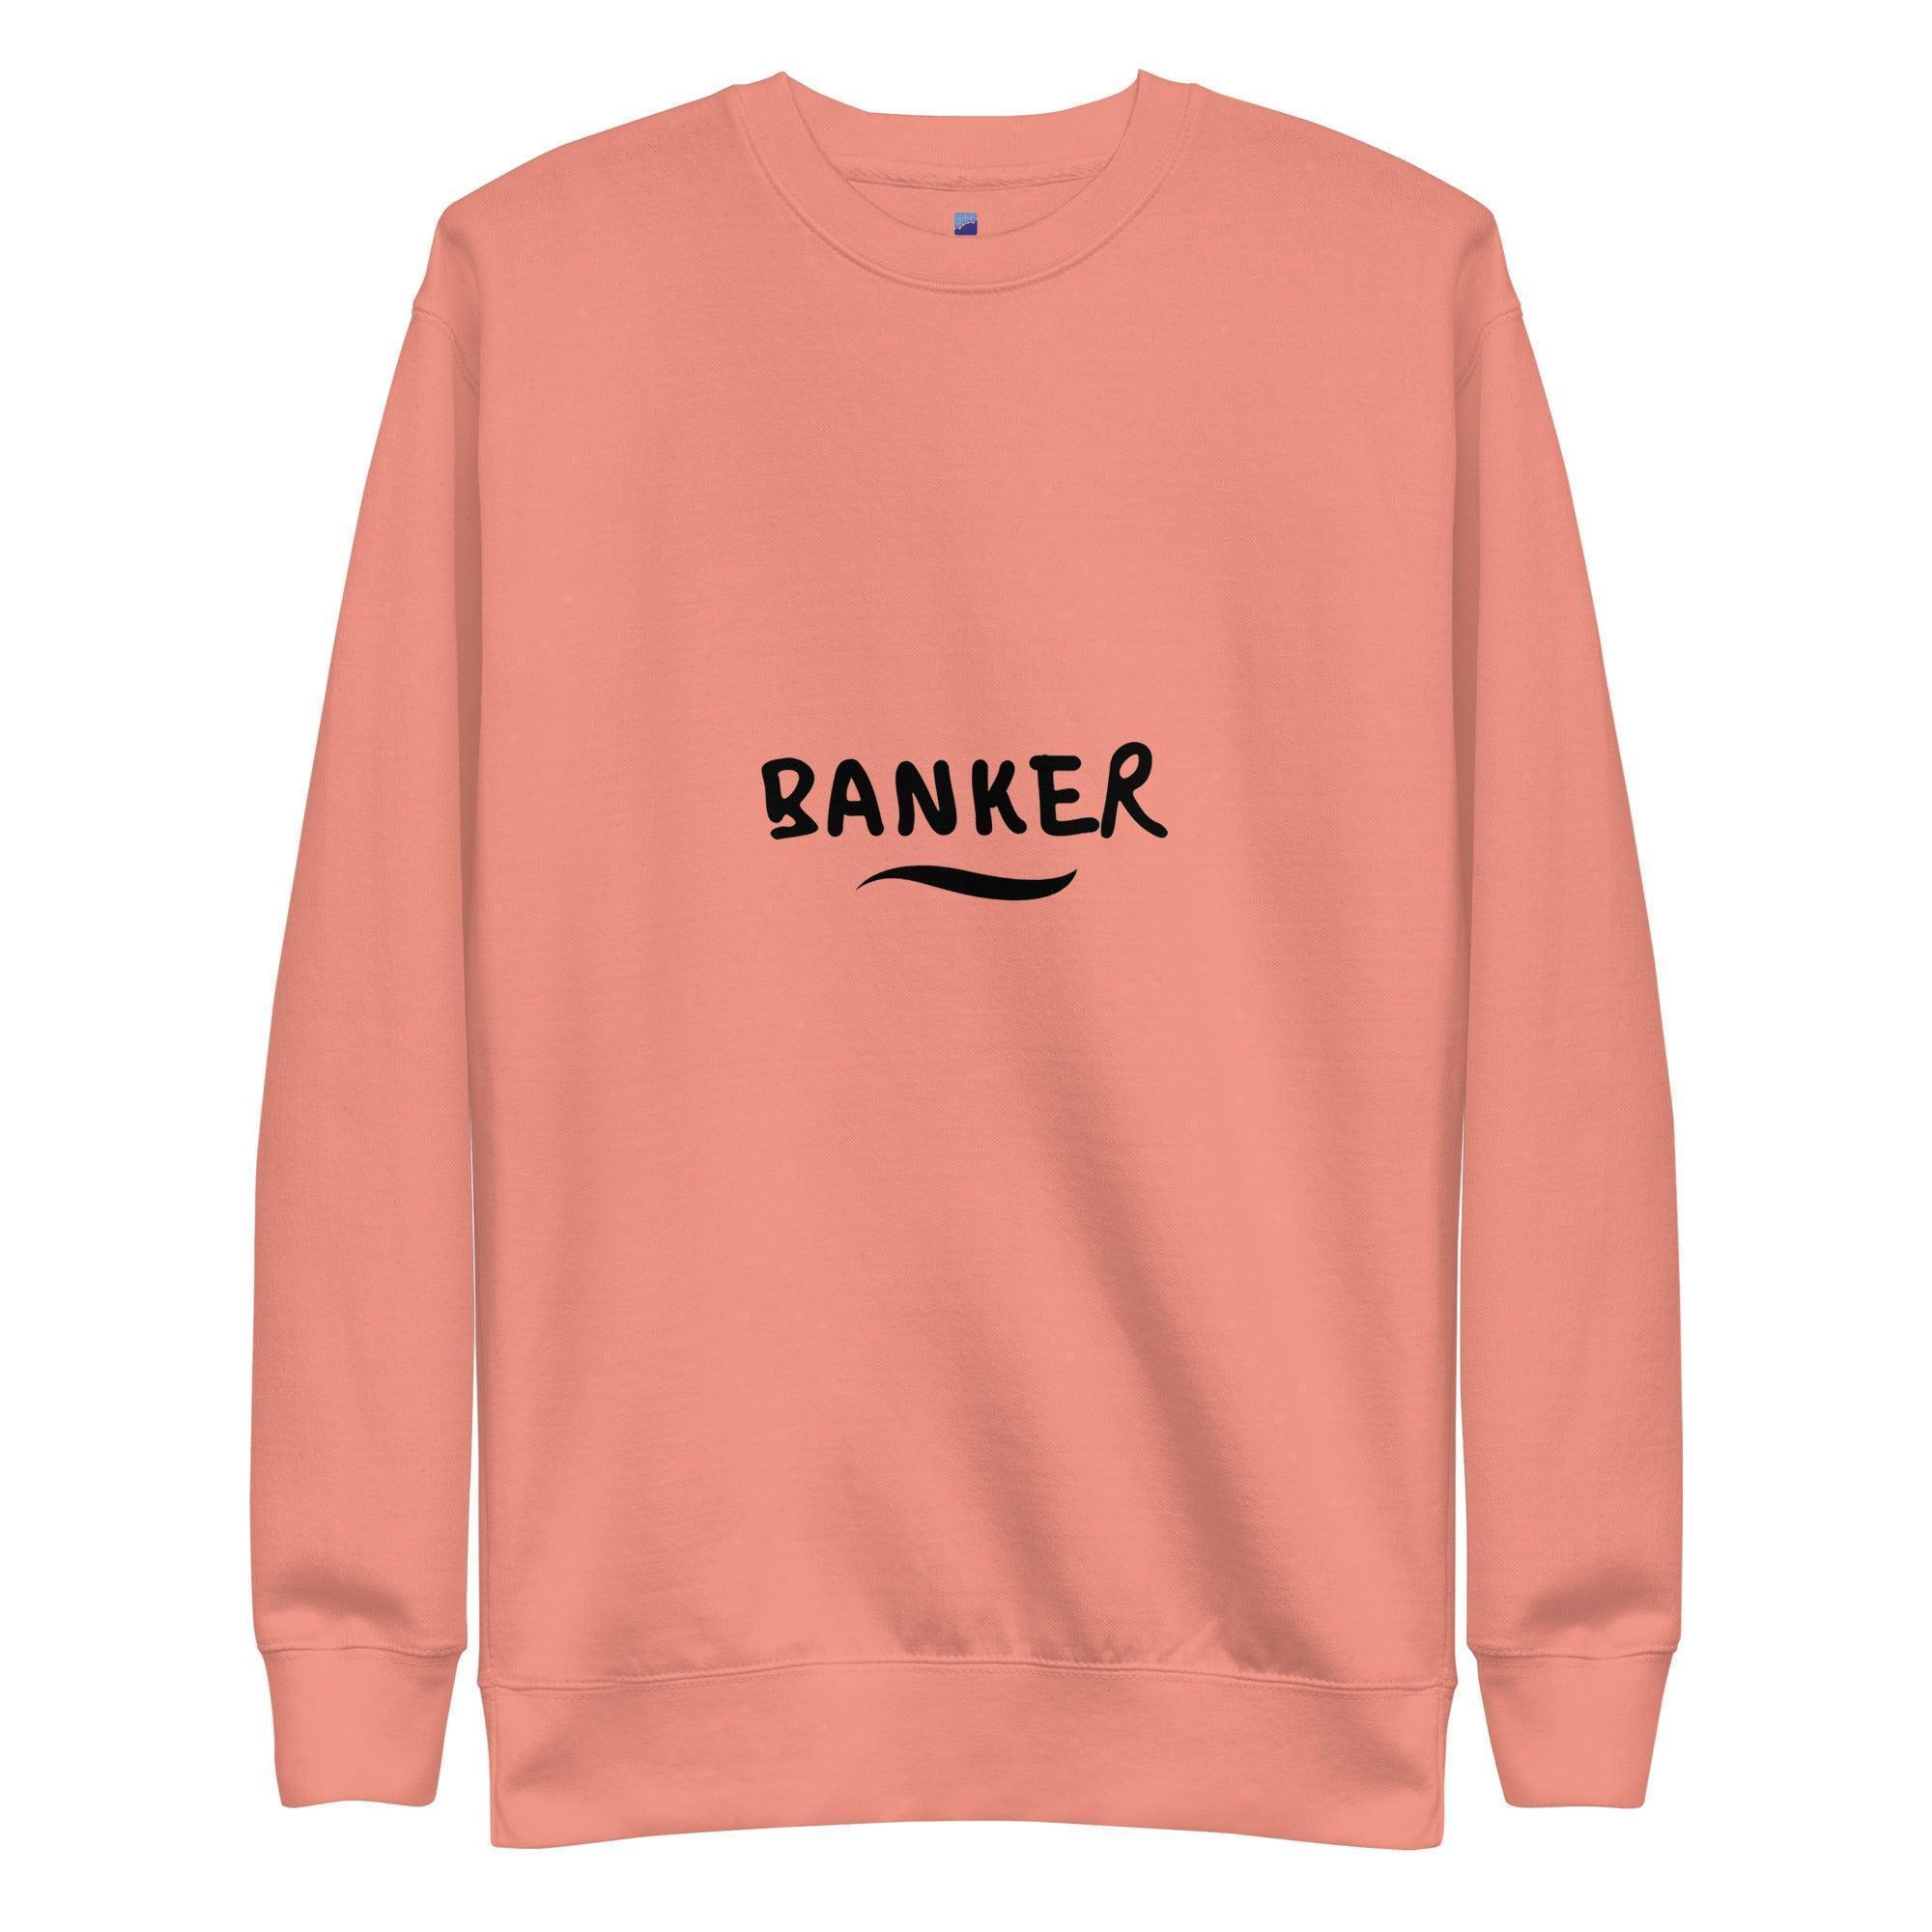 Banker Sweatshirt - InvestmenTees